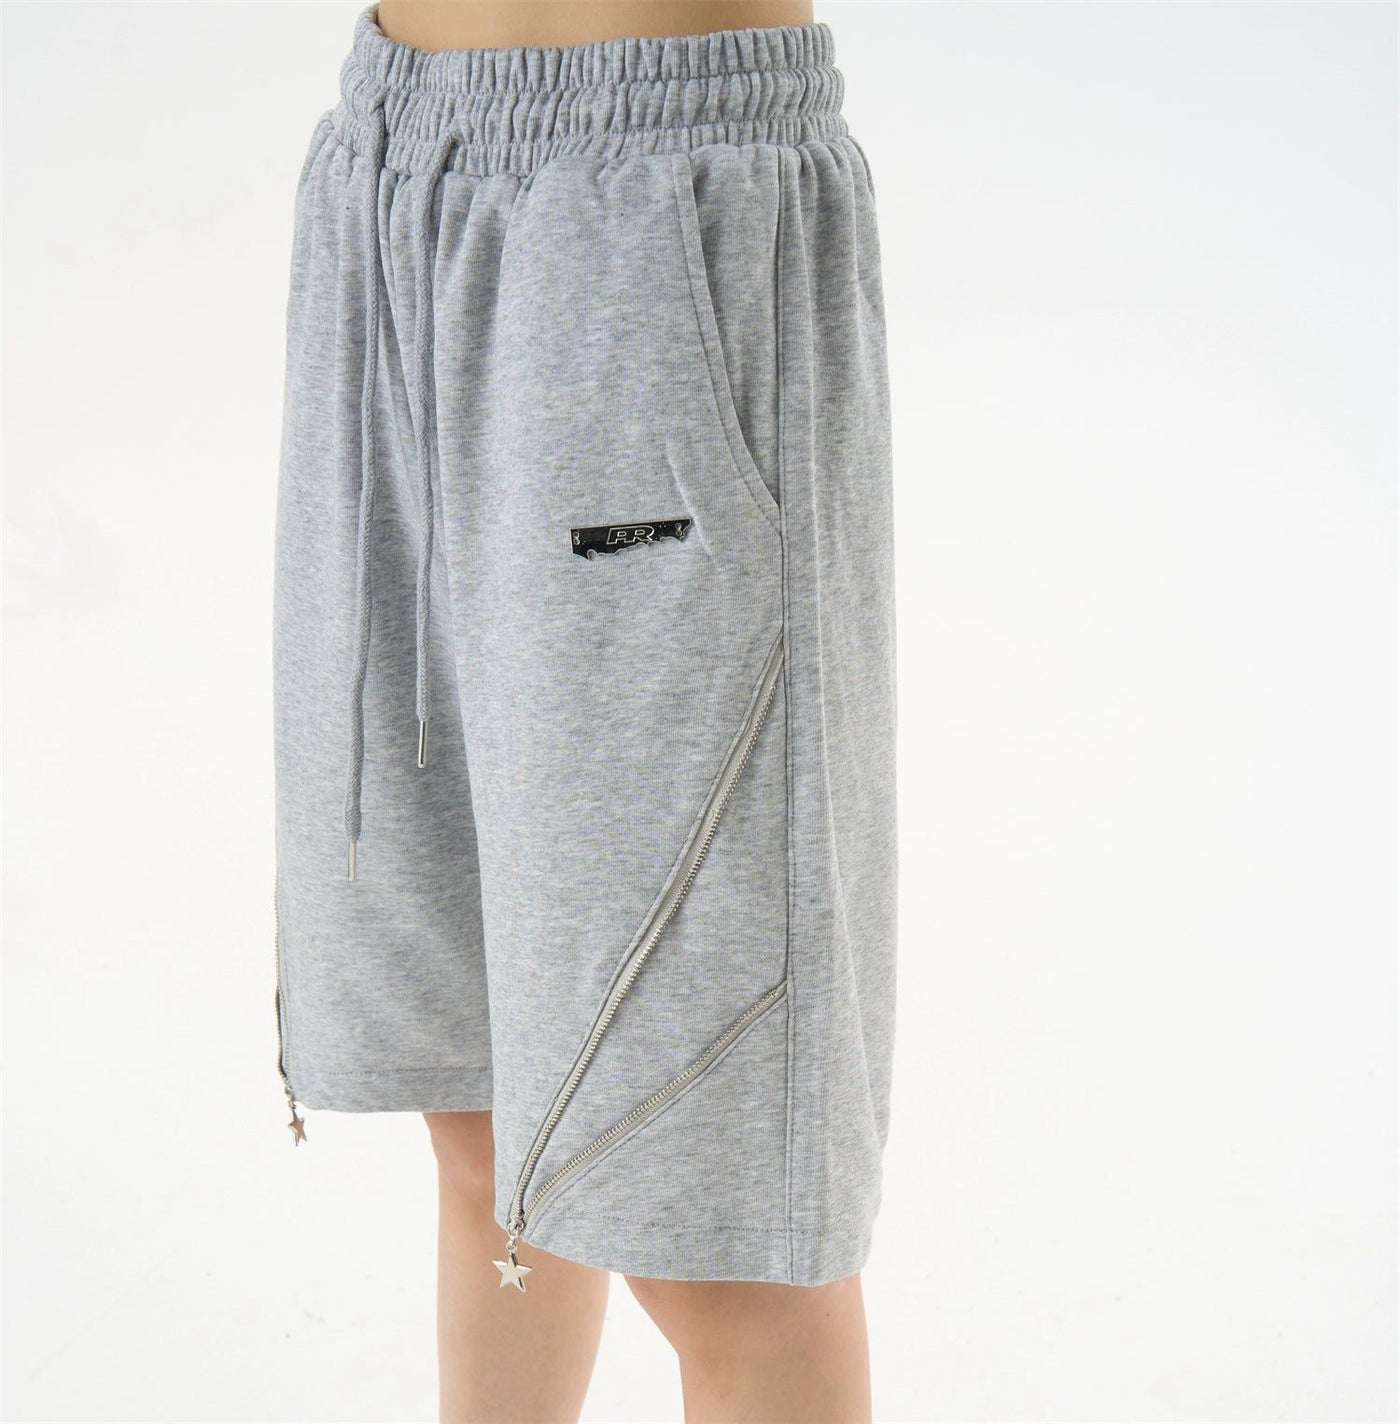 Drawstring Zip Detail Sweat Shorts Korean Street Fashion Shorts By MaxDstr Shop Online at OH Vault